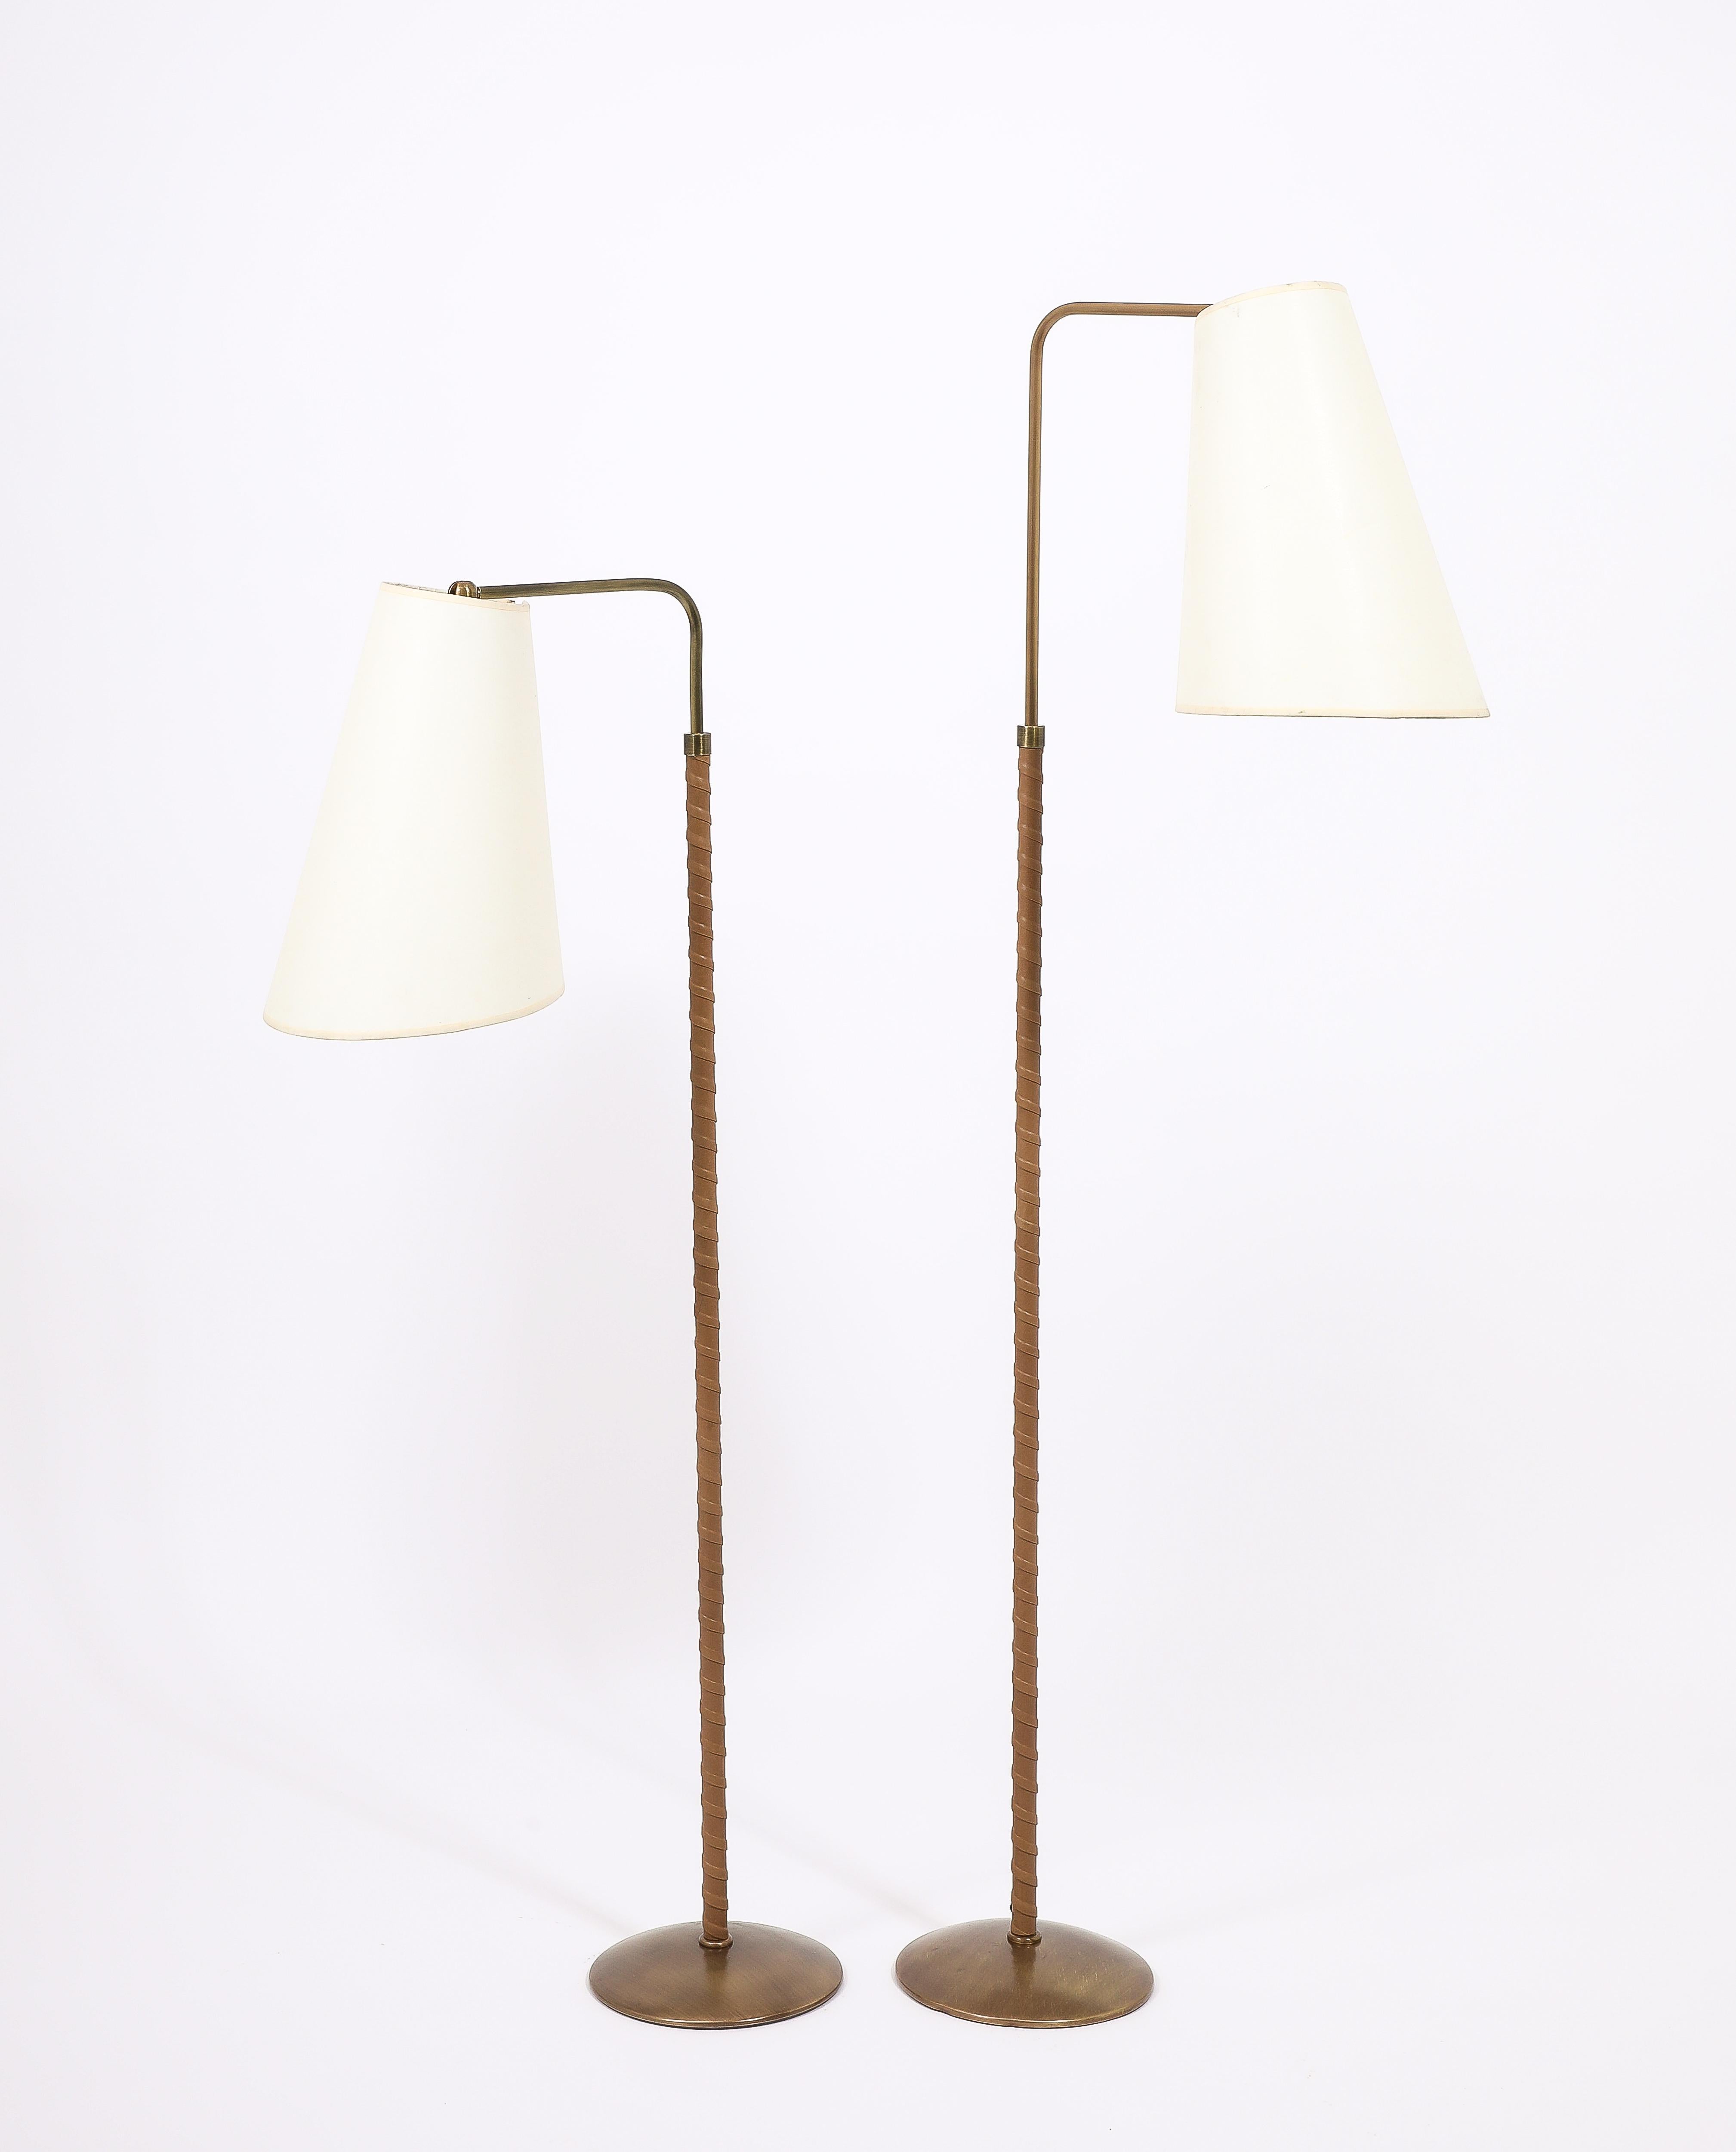 Brass & Tan Leather Metalarte Floor Lamps, Spain 1960's For Sale 4